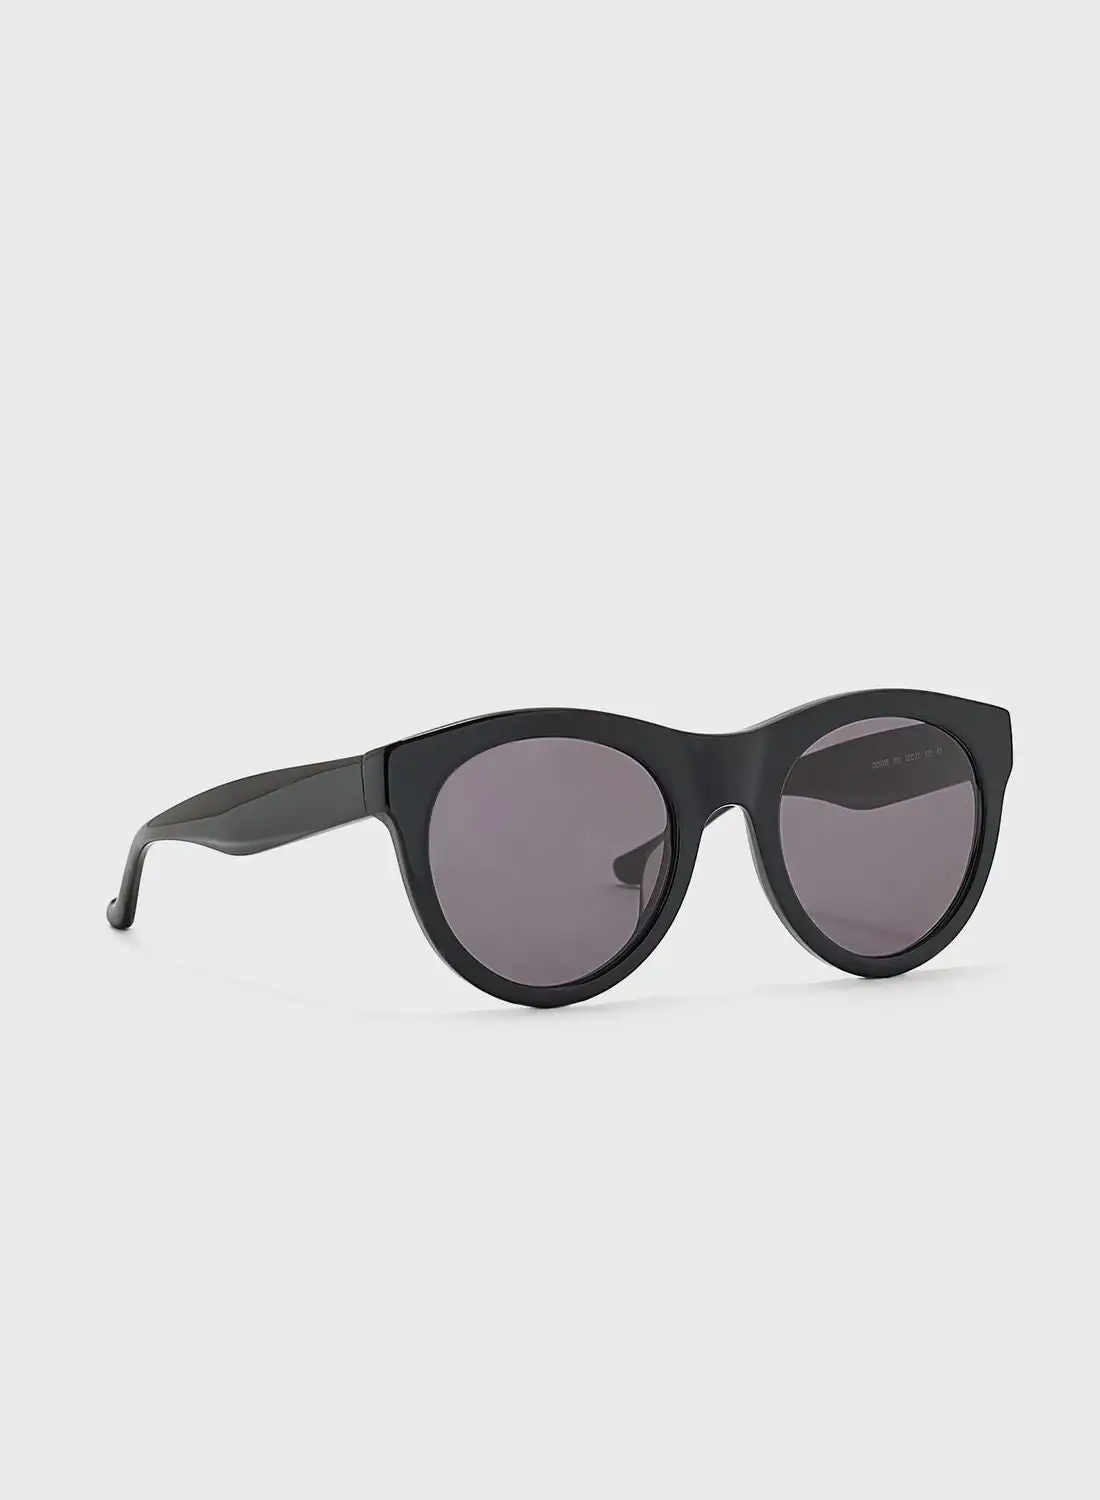 DKNY Round Shape Sunglasses